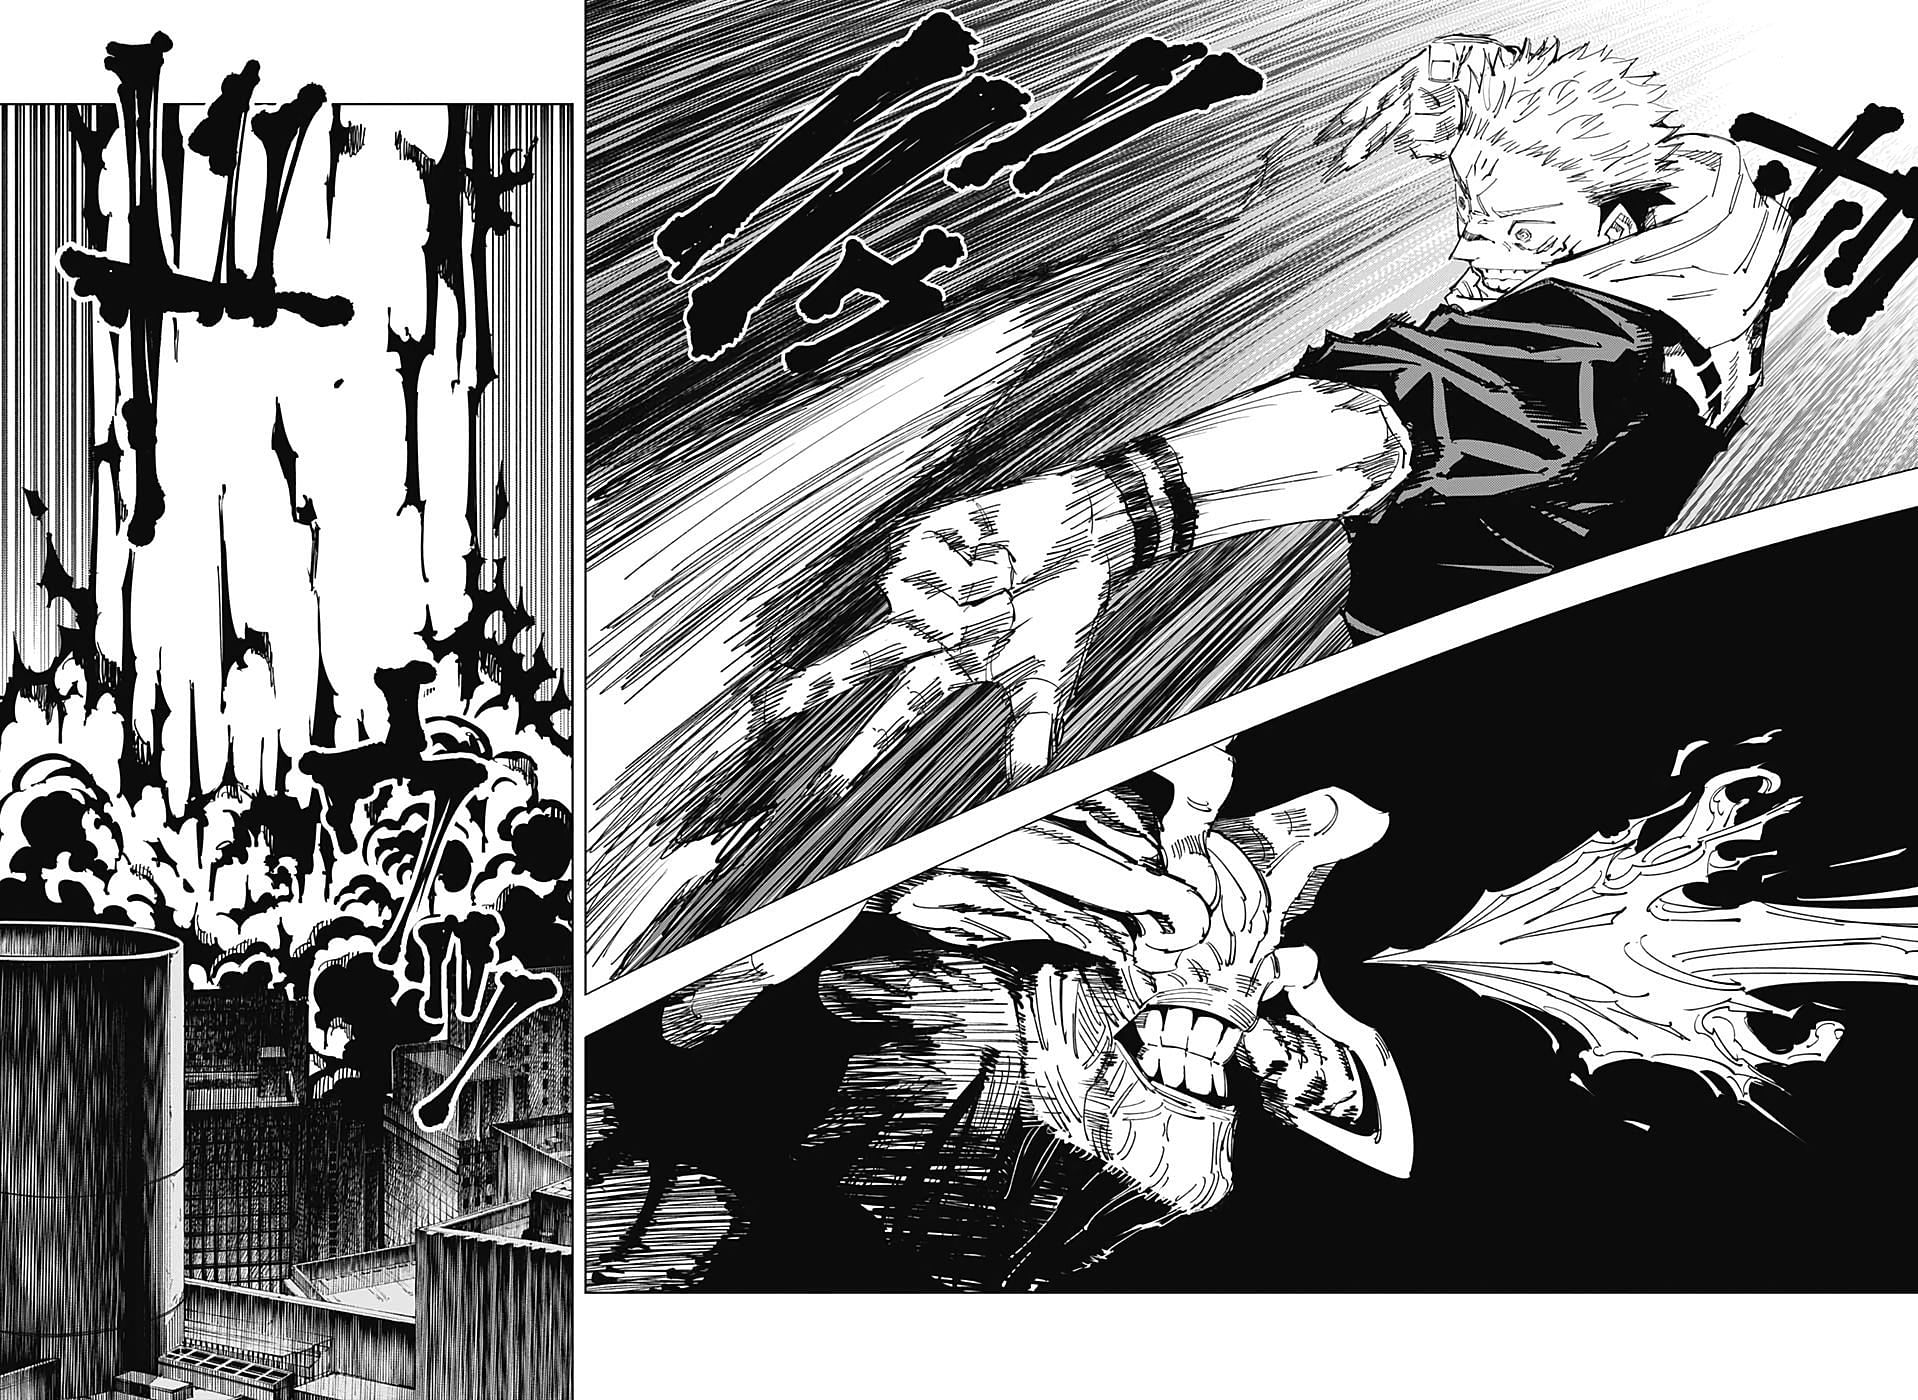 Sukuna finishing off Mahoraga in Jujutsu Kaisen manga (Image via Gege Akutame)